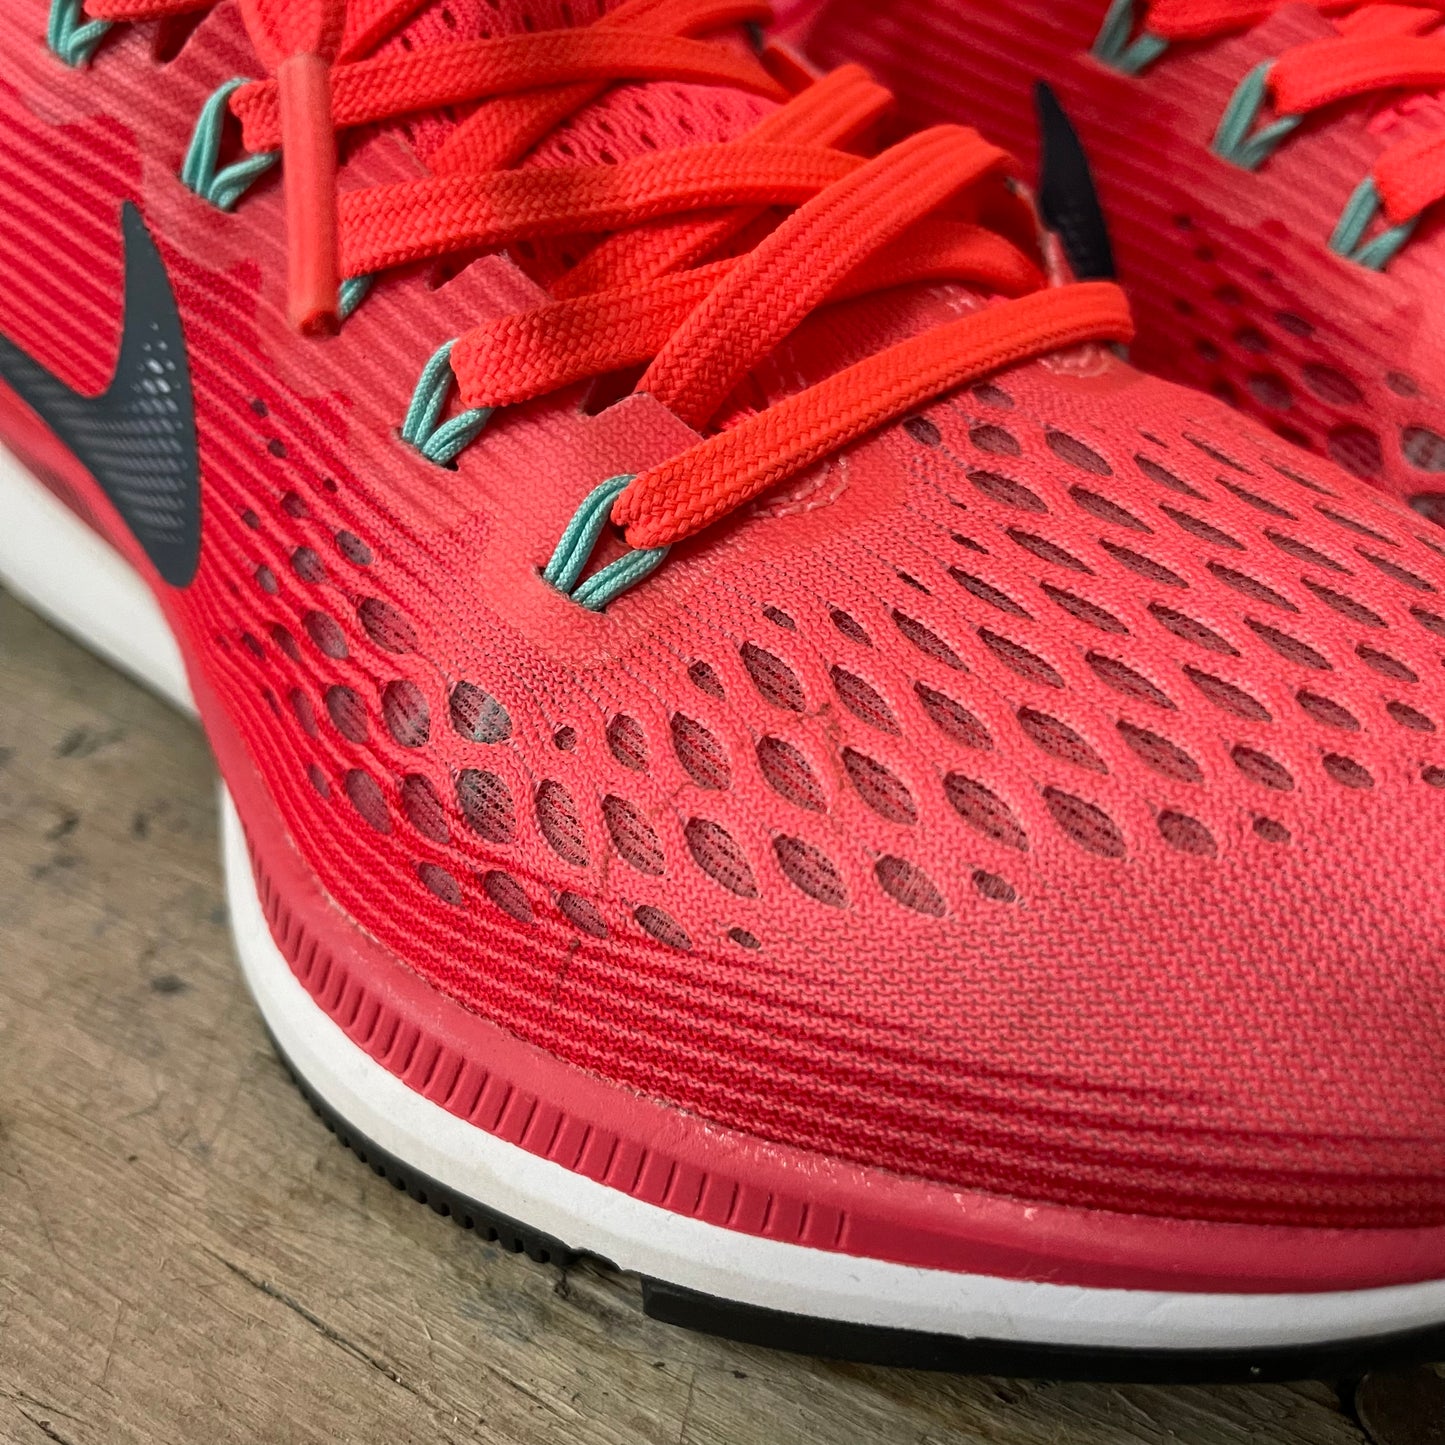 Nike Womens Air Zoom Pegasus 34 880560-602 Pink Running Shoes Sneakers Size 7.5